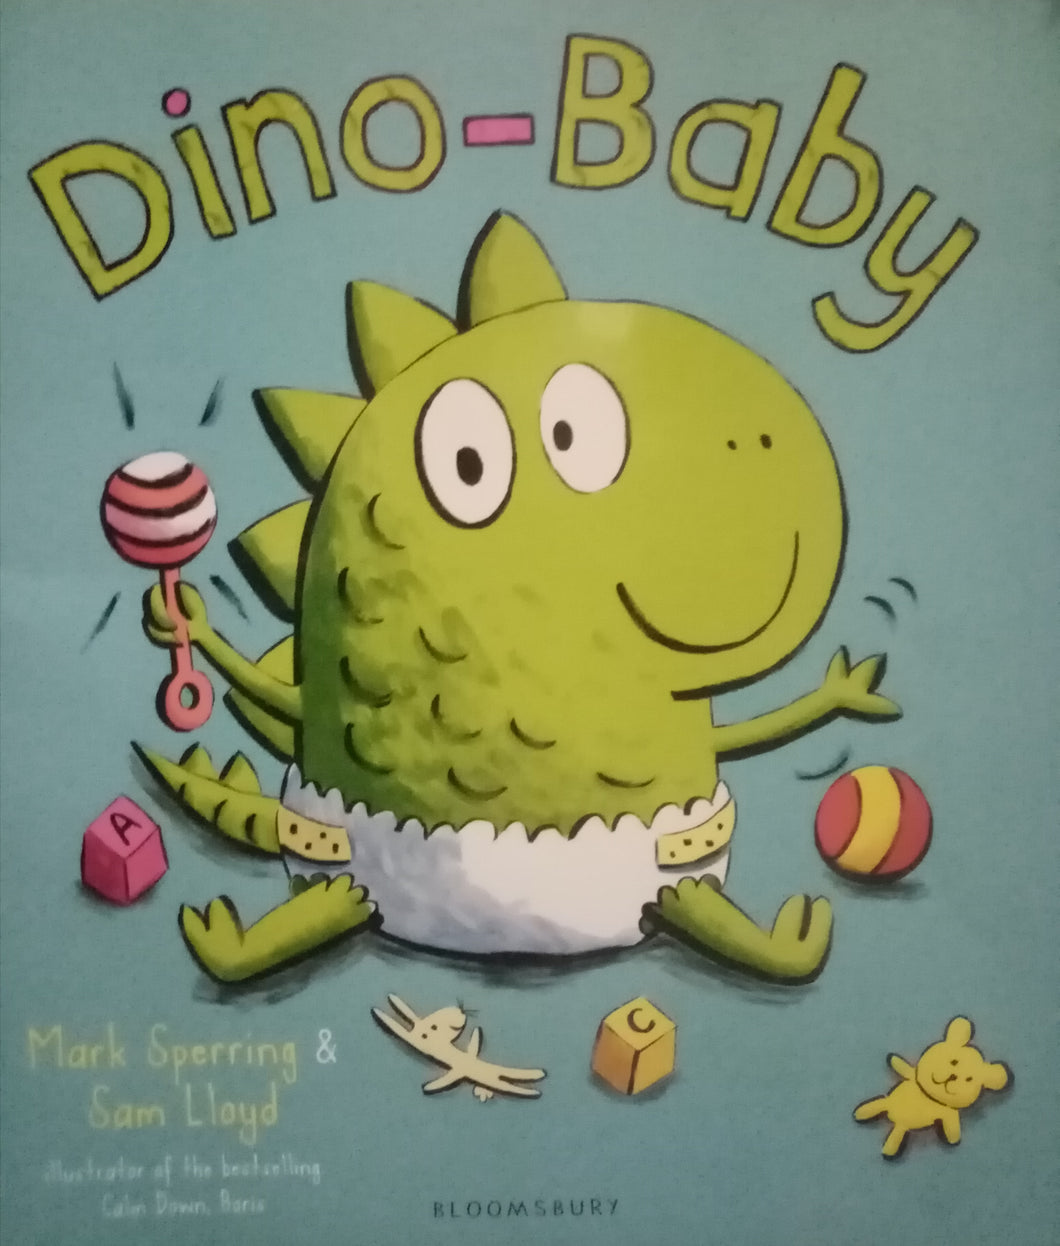 Dino-Baby by Mark Sperring and Sam Lloyd